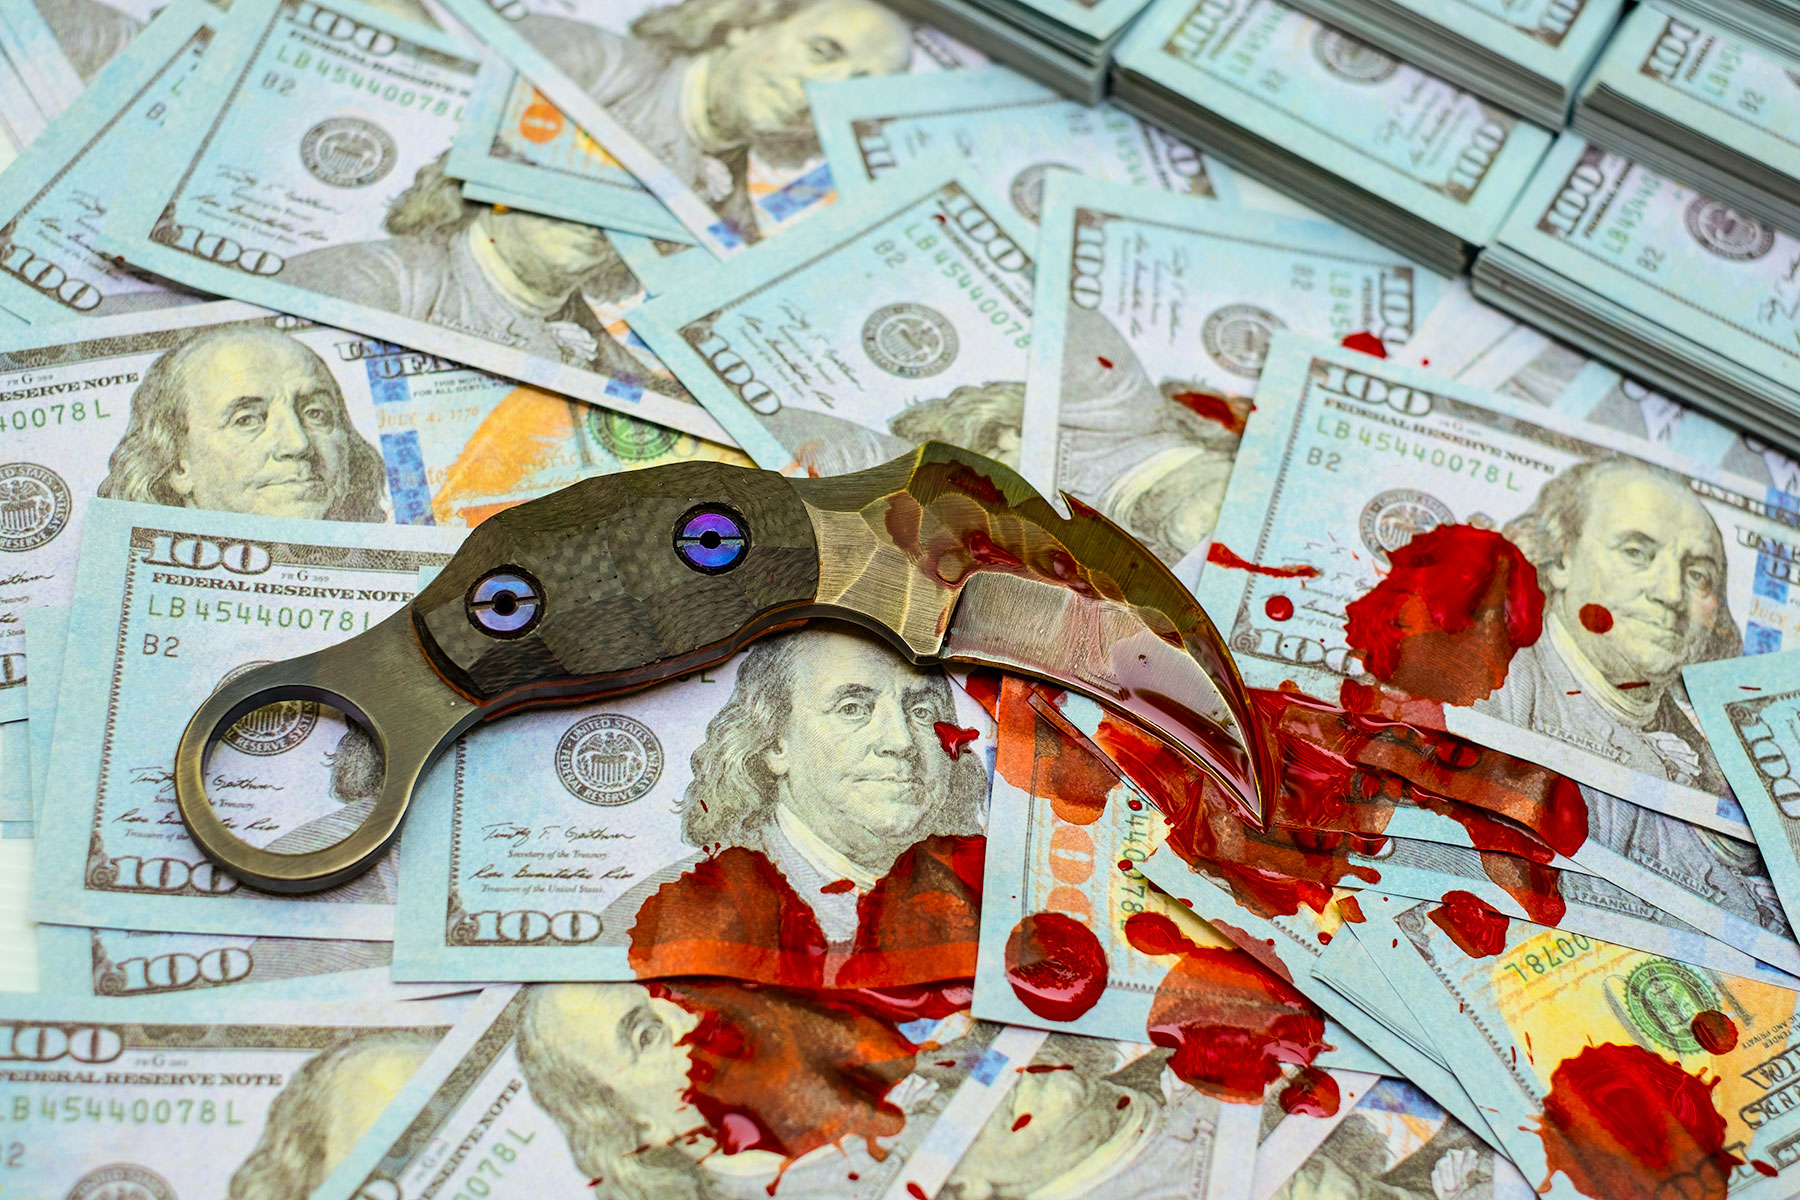 Banking Cartels Hold Blood Money For Satanic Terrorist Organizations